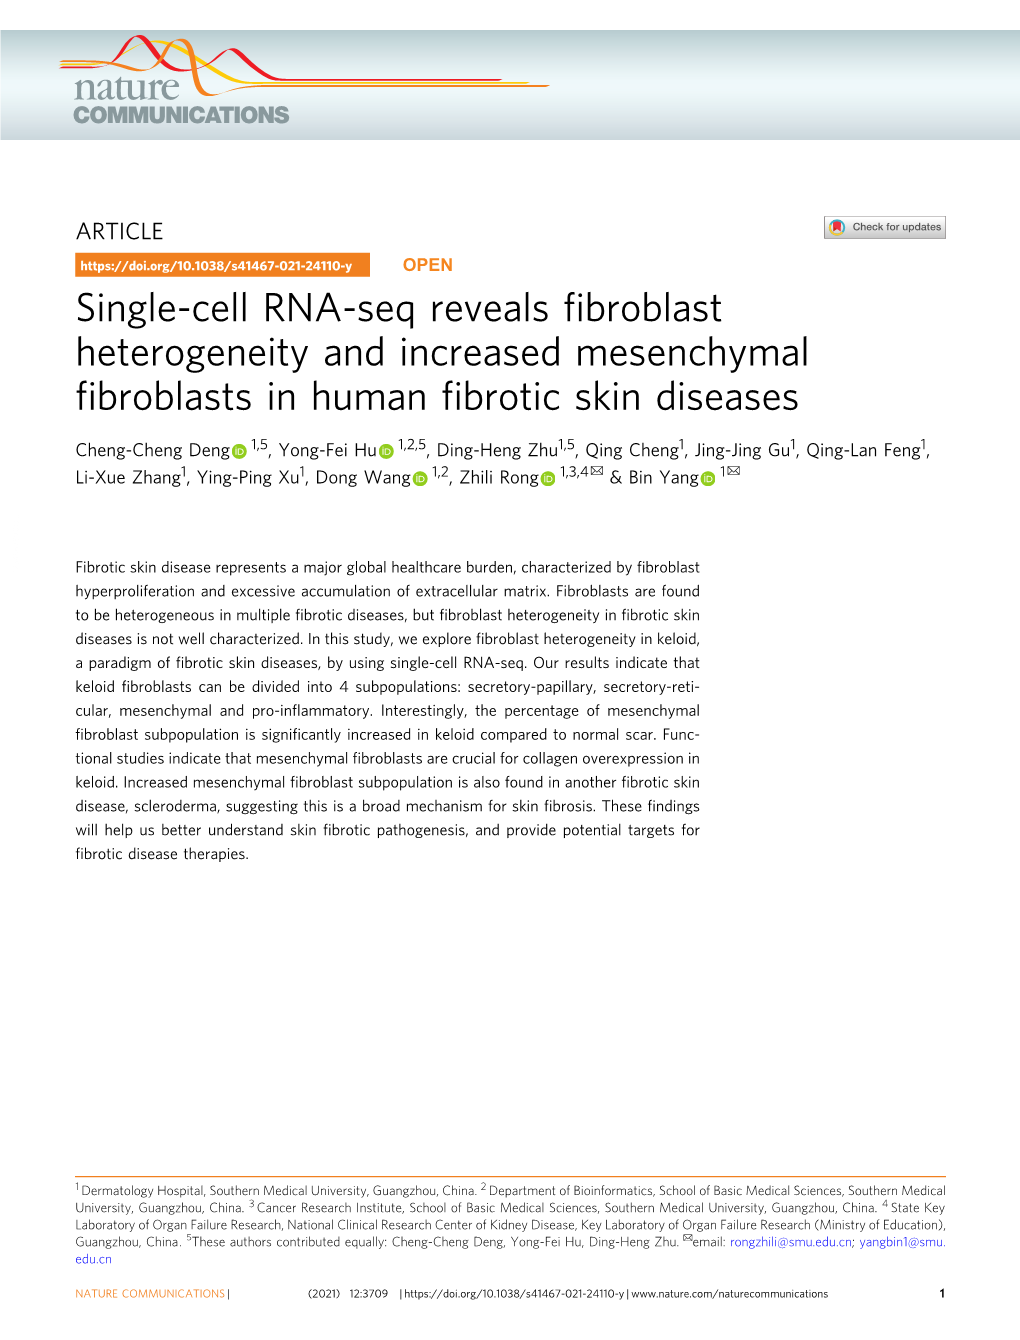 Single-Cell RNA-Seq Reveals Fibroblast Heterogeneity and Increased